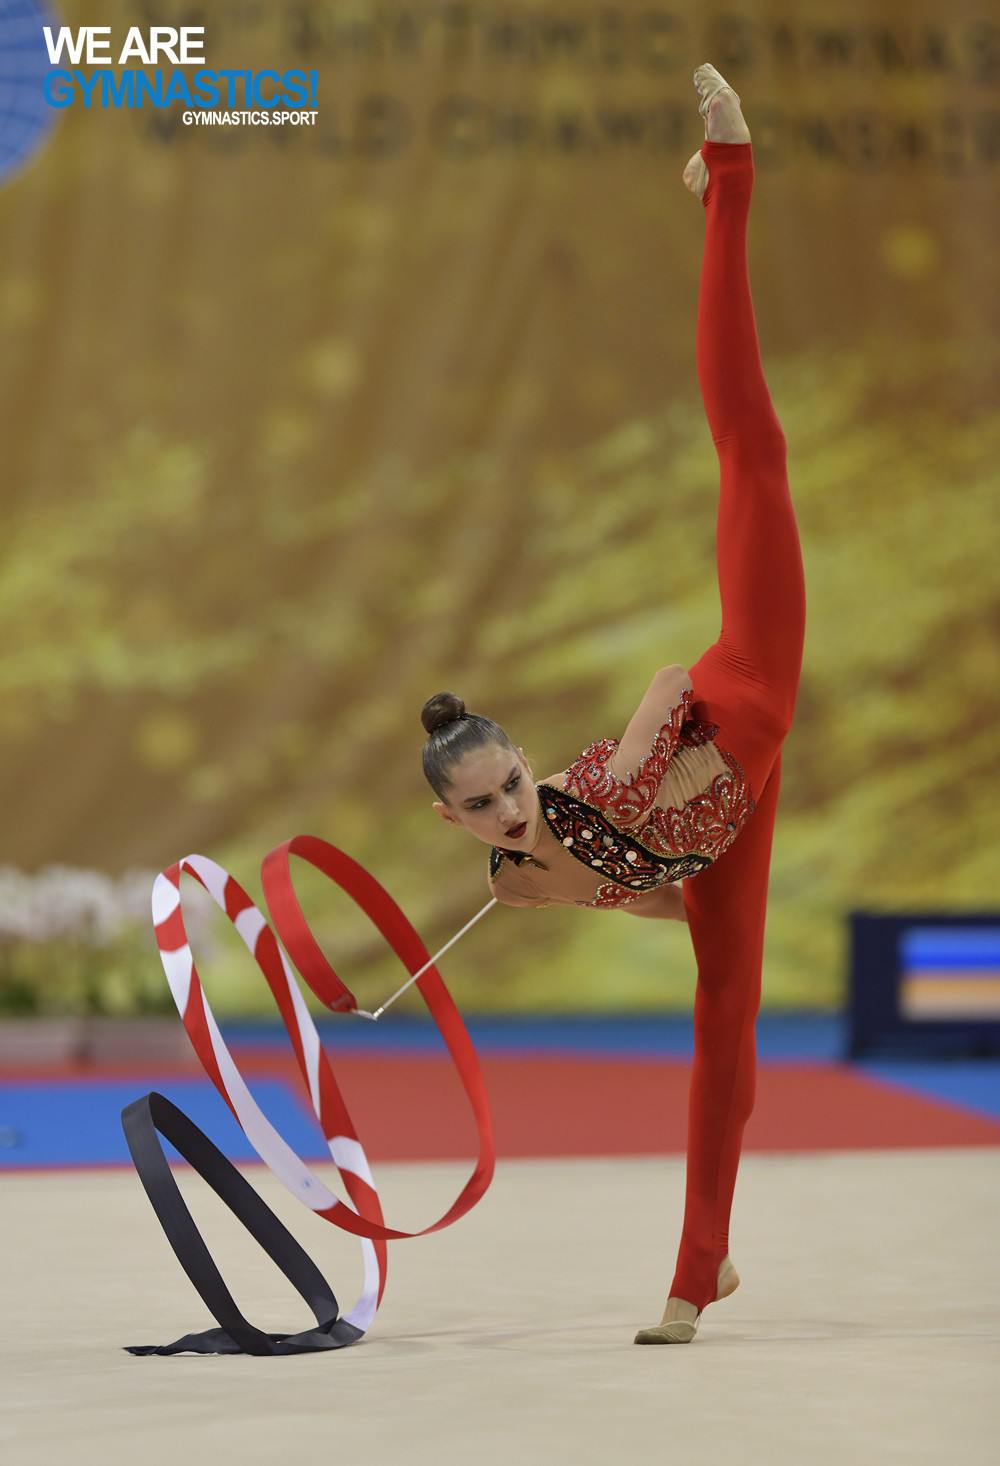 Ukraine's 15-year-old Vlada Nikolchenko is seeking to break through and win a medal at the FIG Rhythmic Gymnastics World Cup which starts in Tashkent tomorrow ©FIG